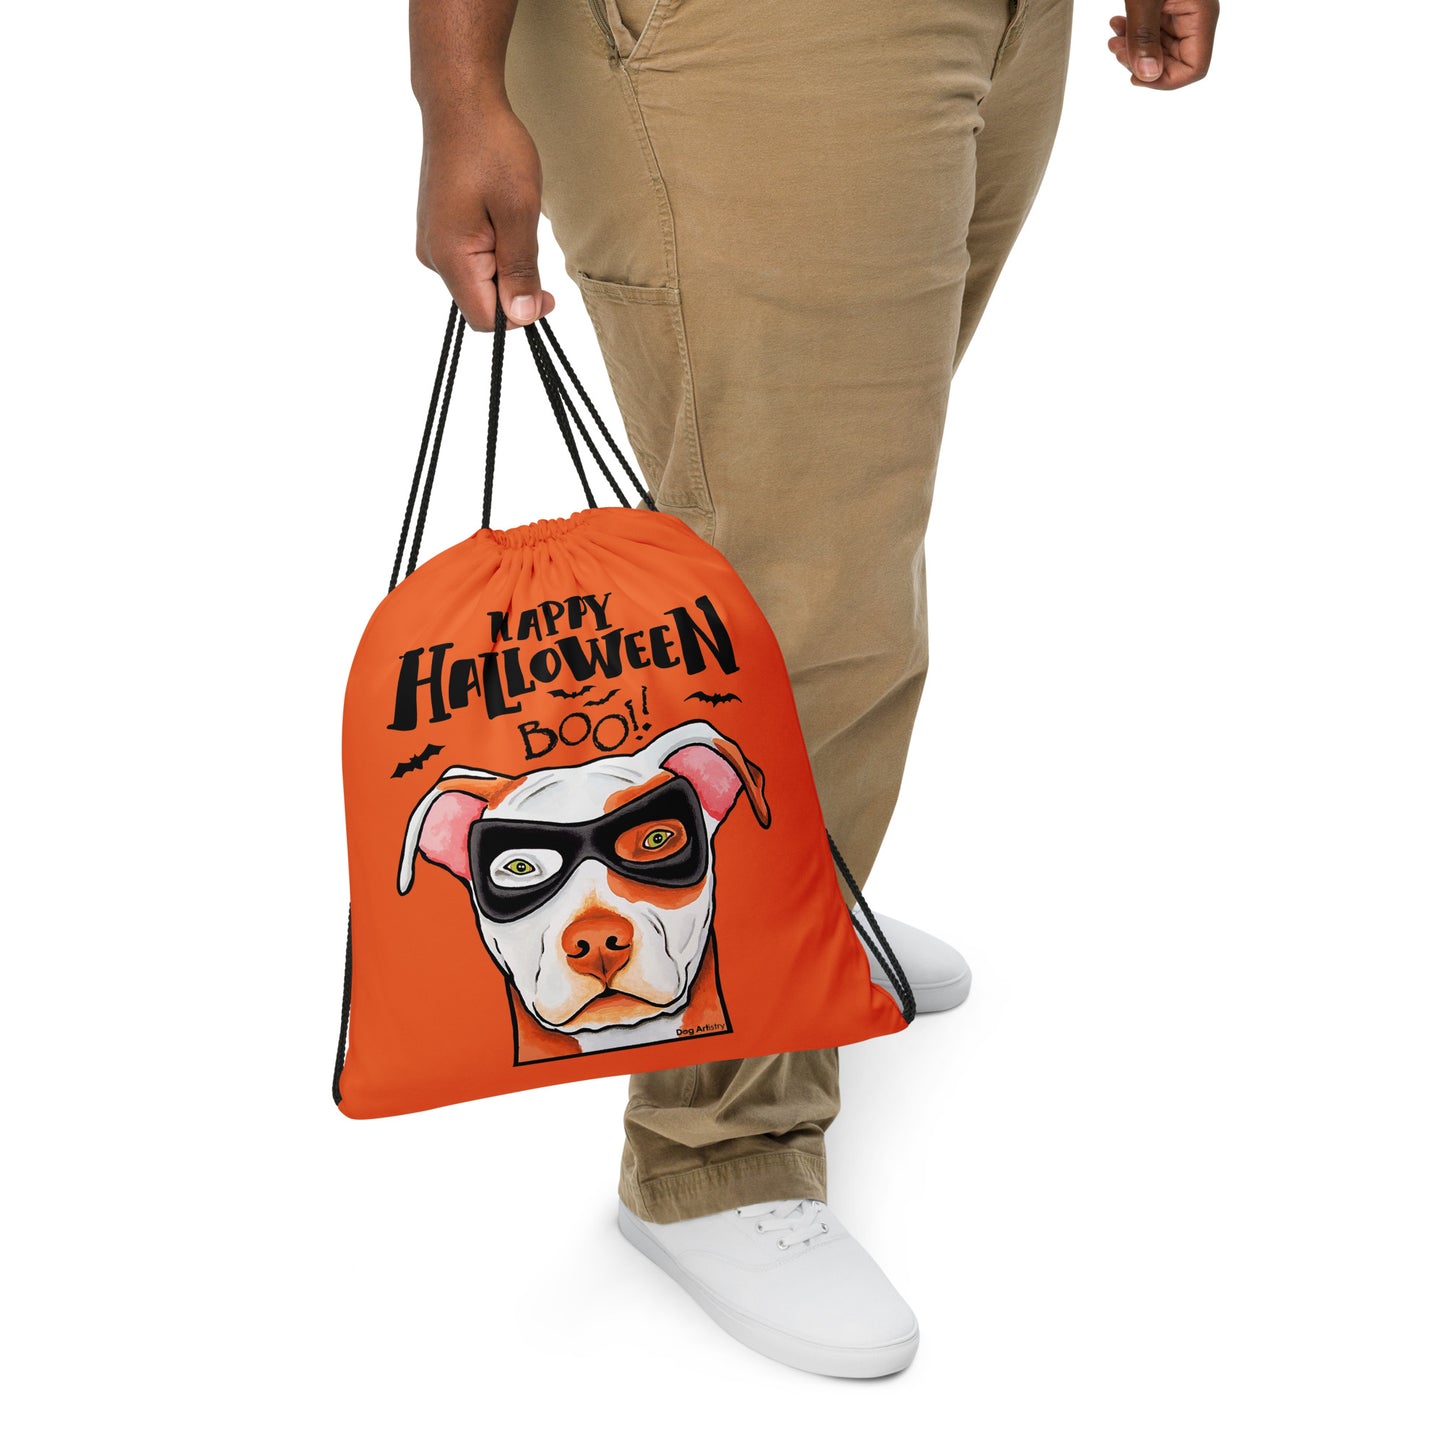 Cool Happy Halloween American Pit Bull wearing mask Orange drawstring bag by Dog Artistry Halloween candy bag.